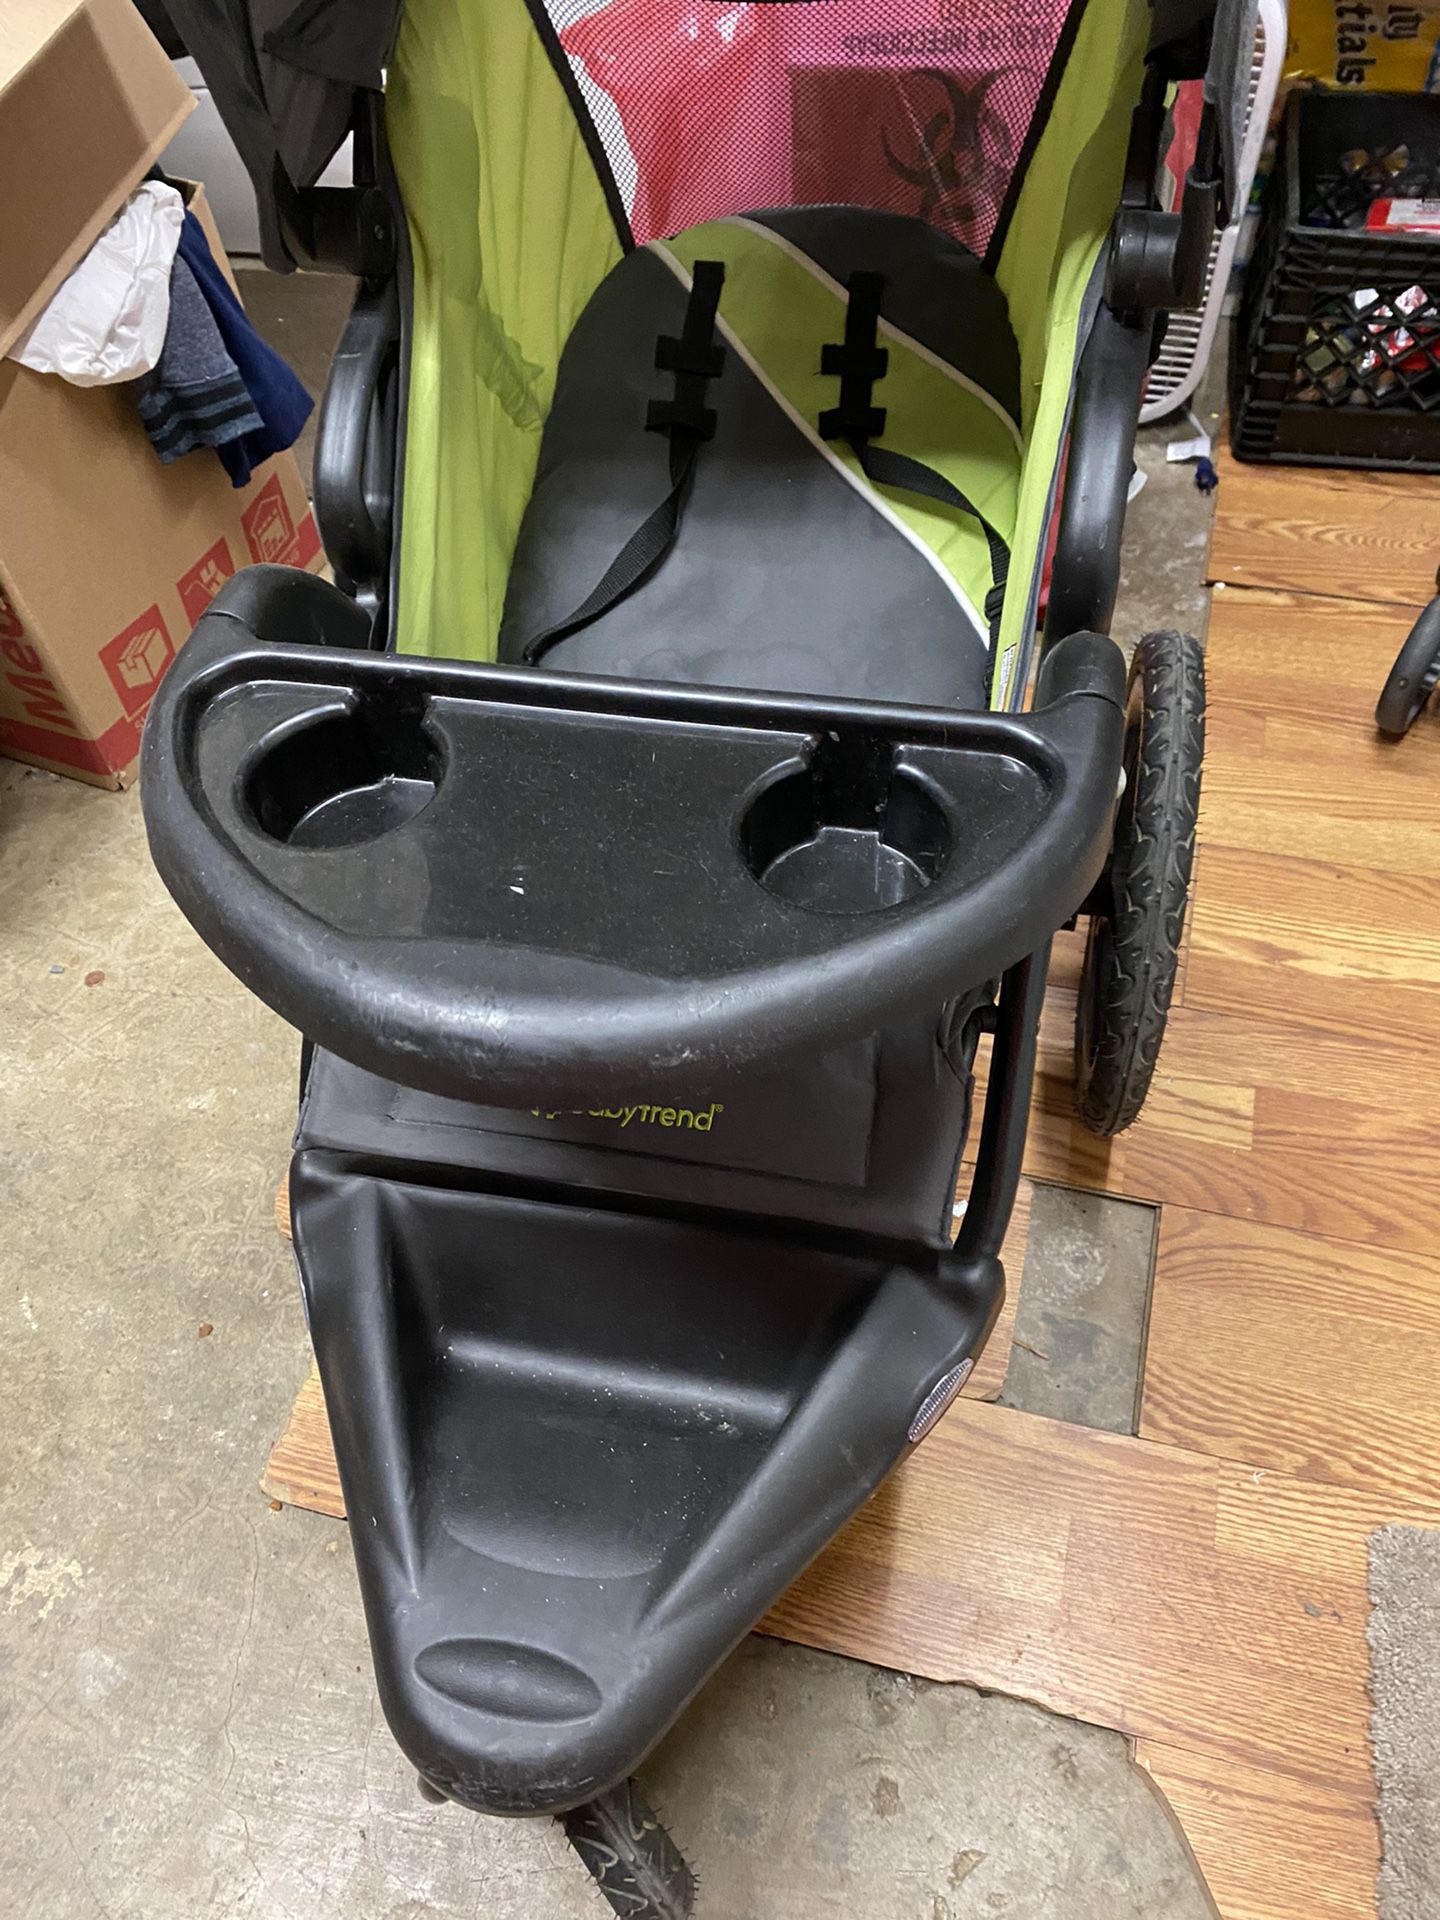 Baby Trend Jogging Stroller $10